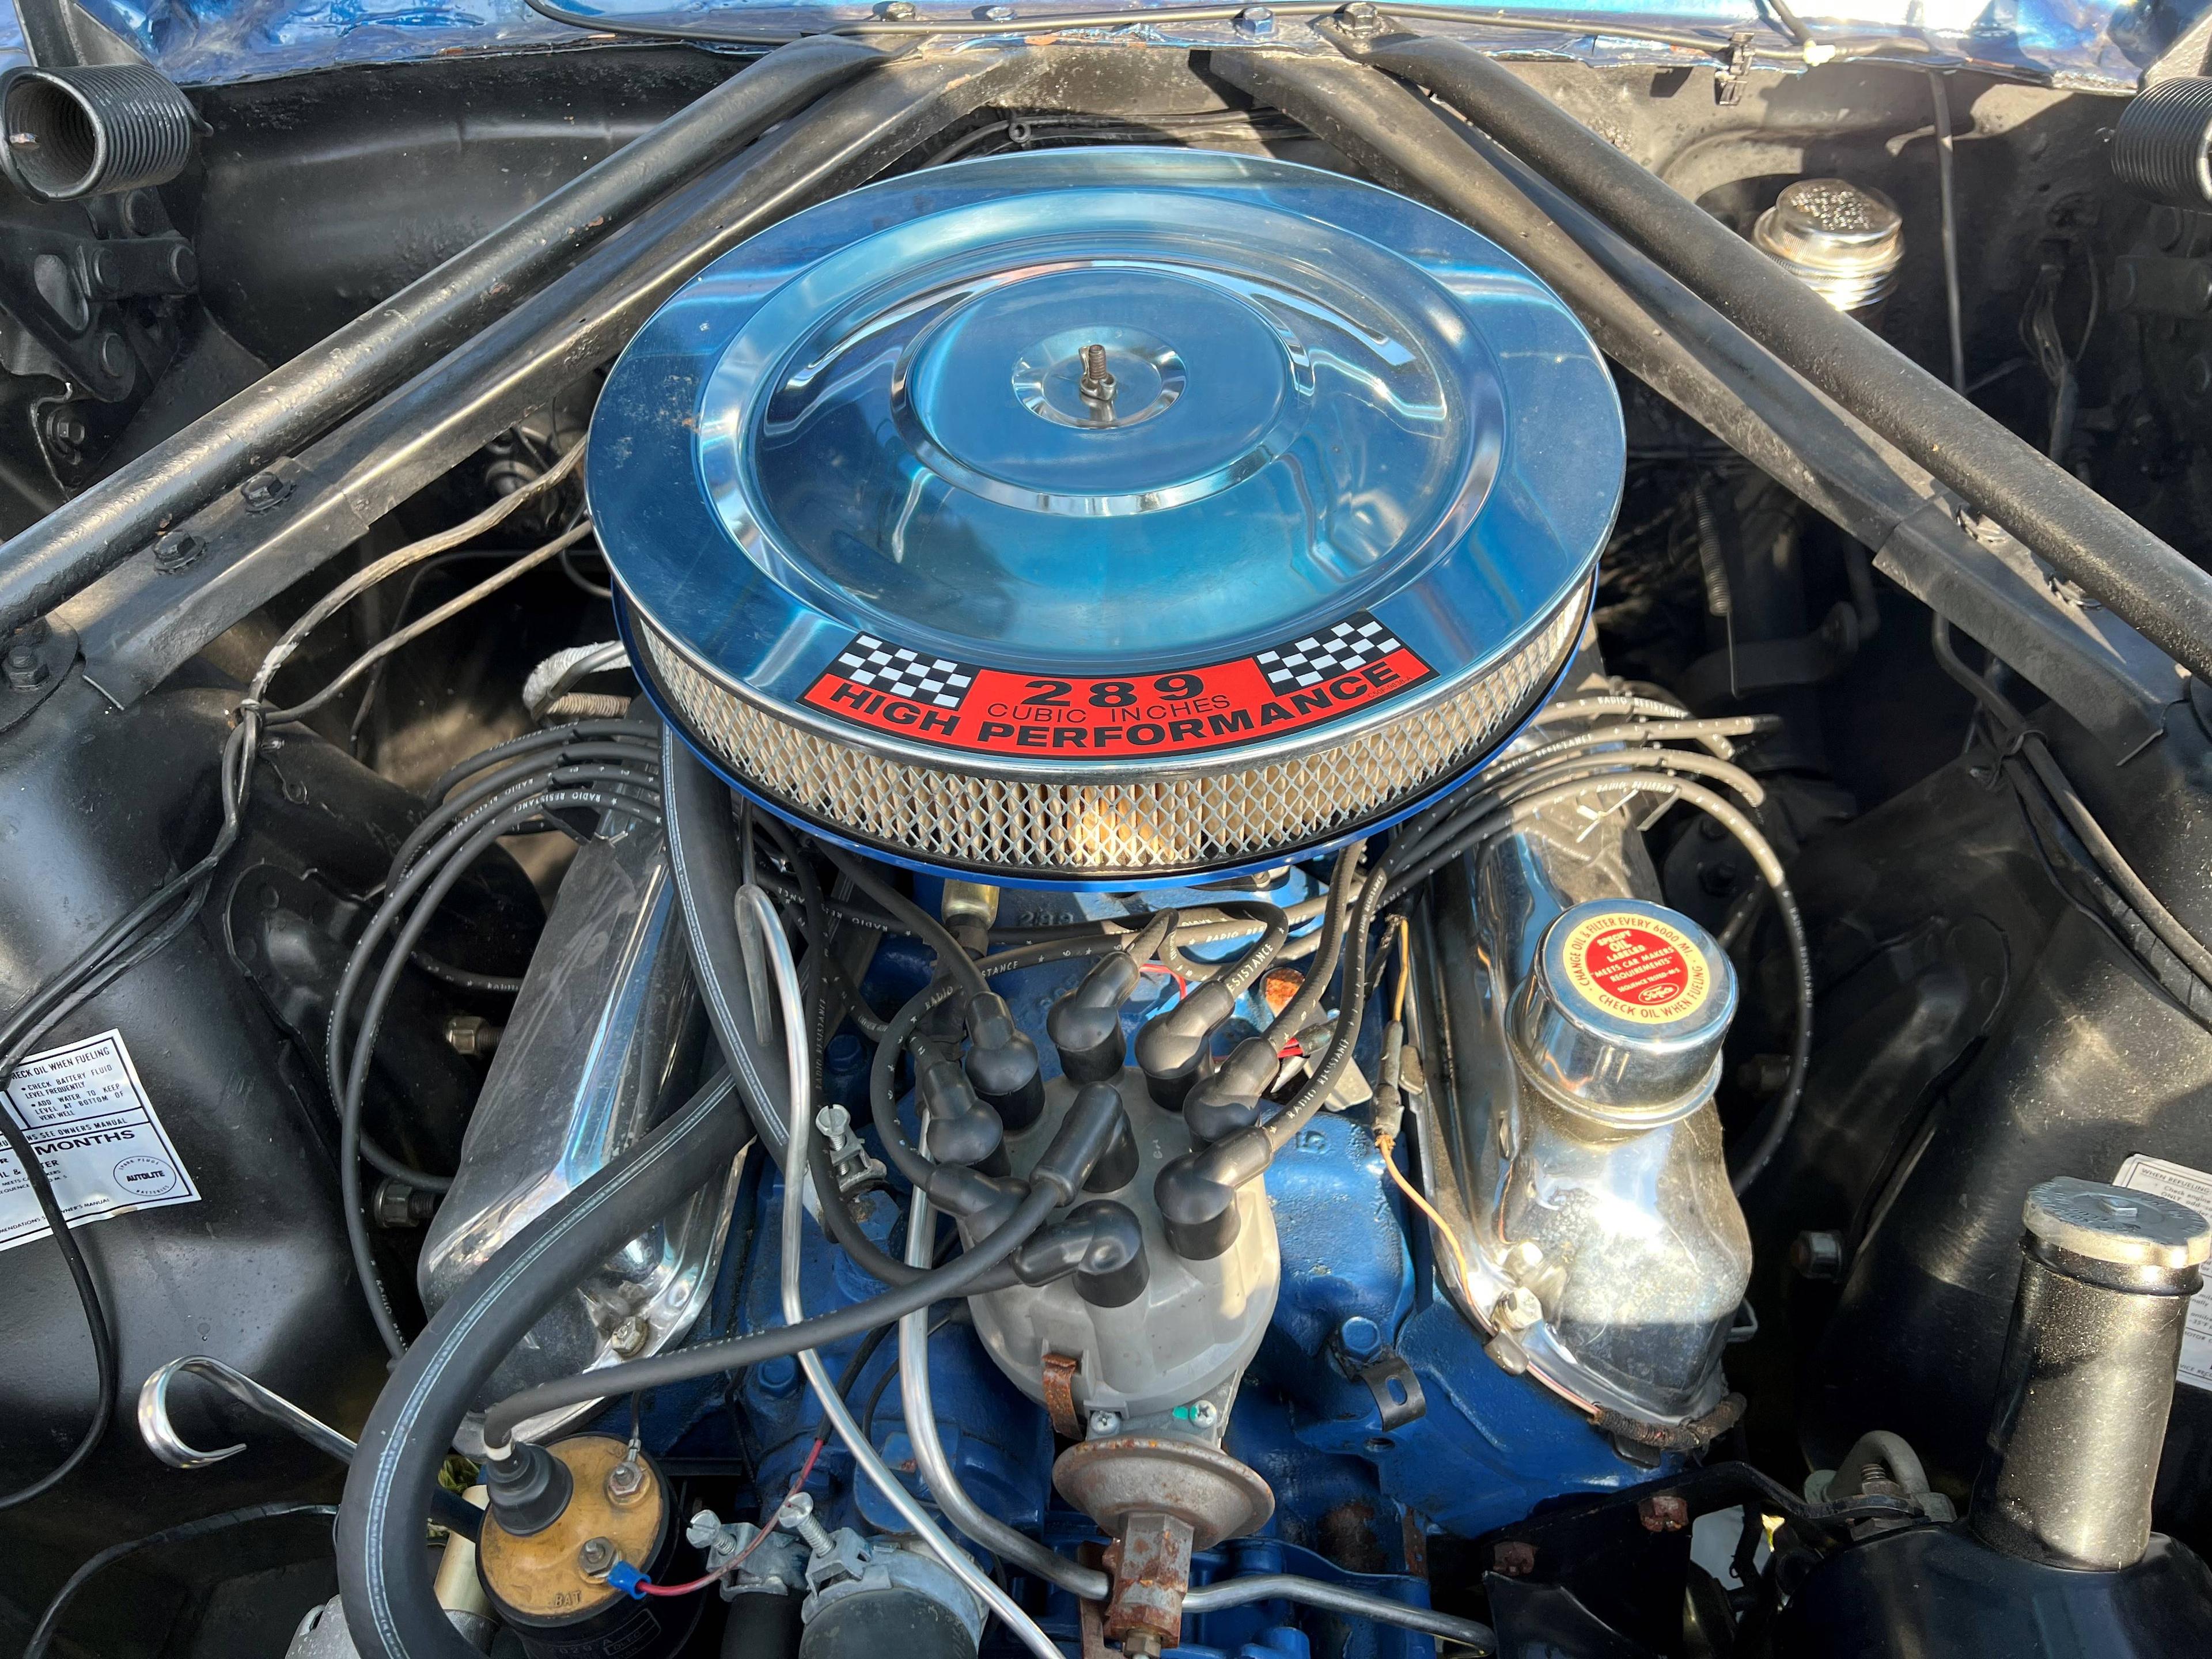 1966 Ford Mustang Convertible. Factory original 289 cid 2V 200hp V-8 engine